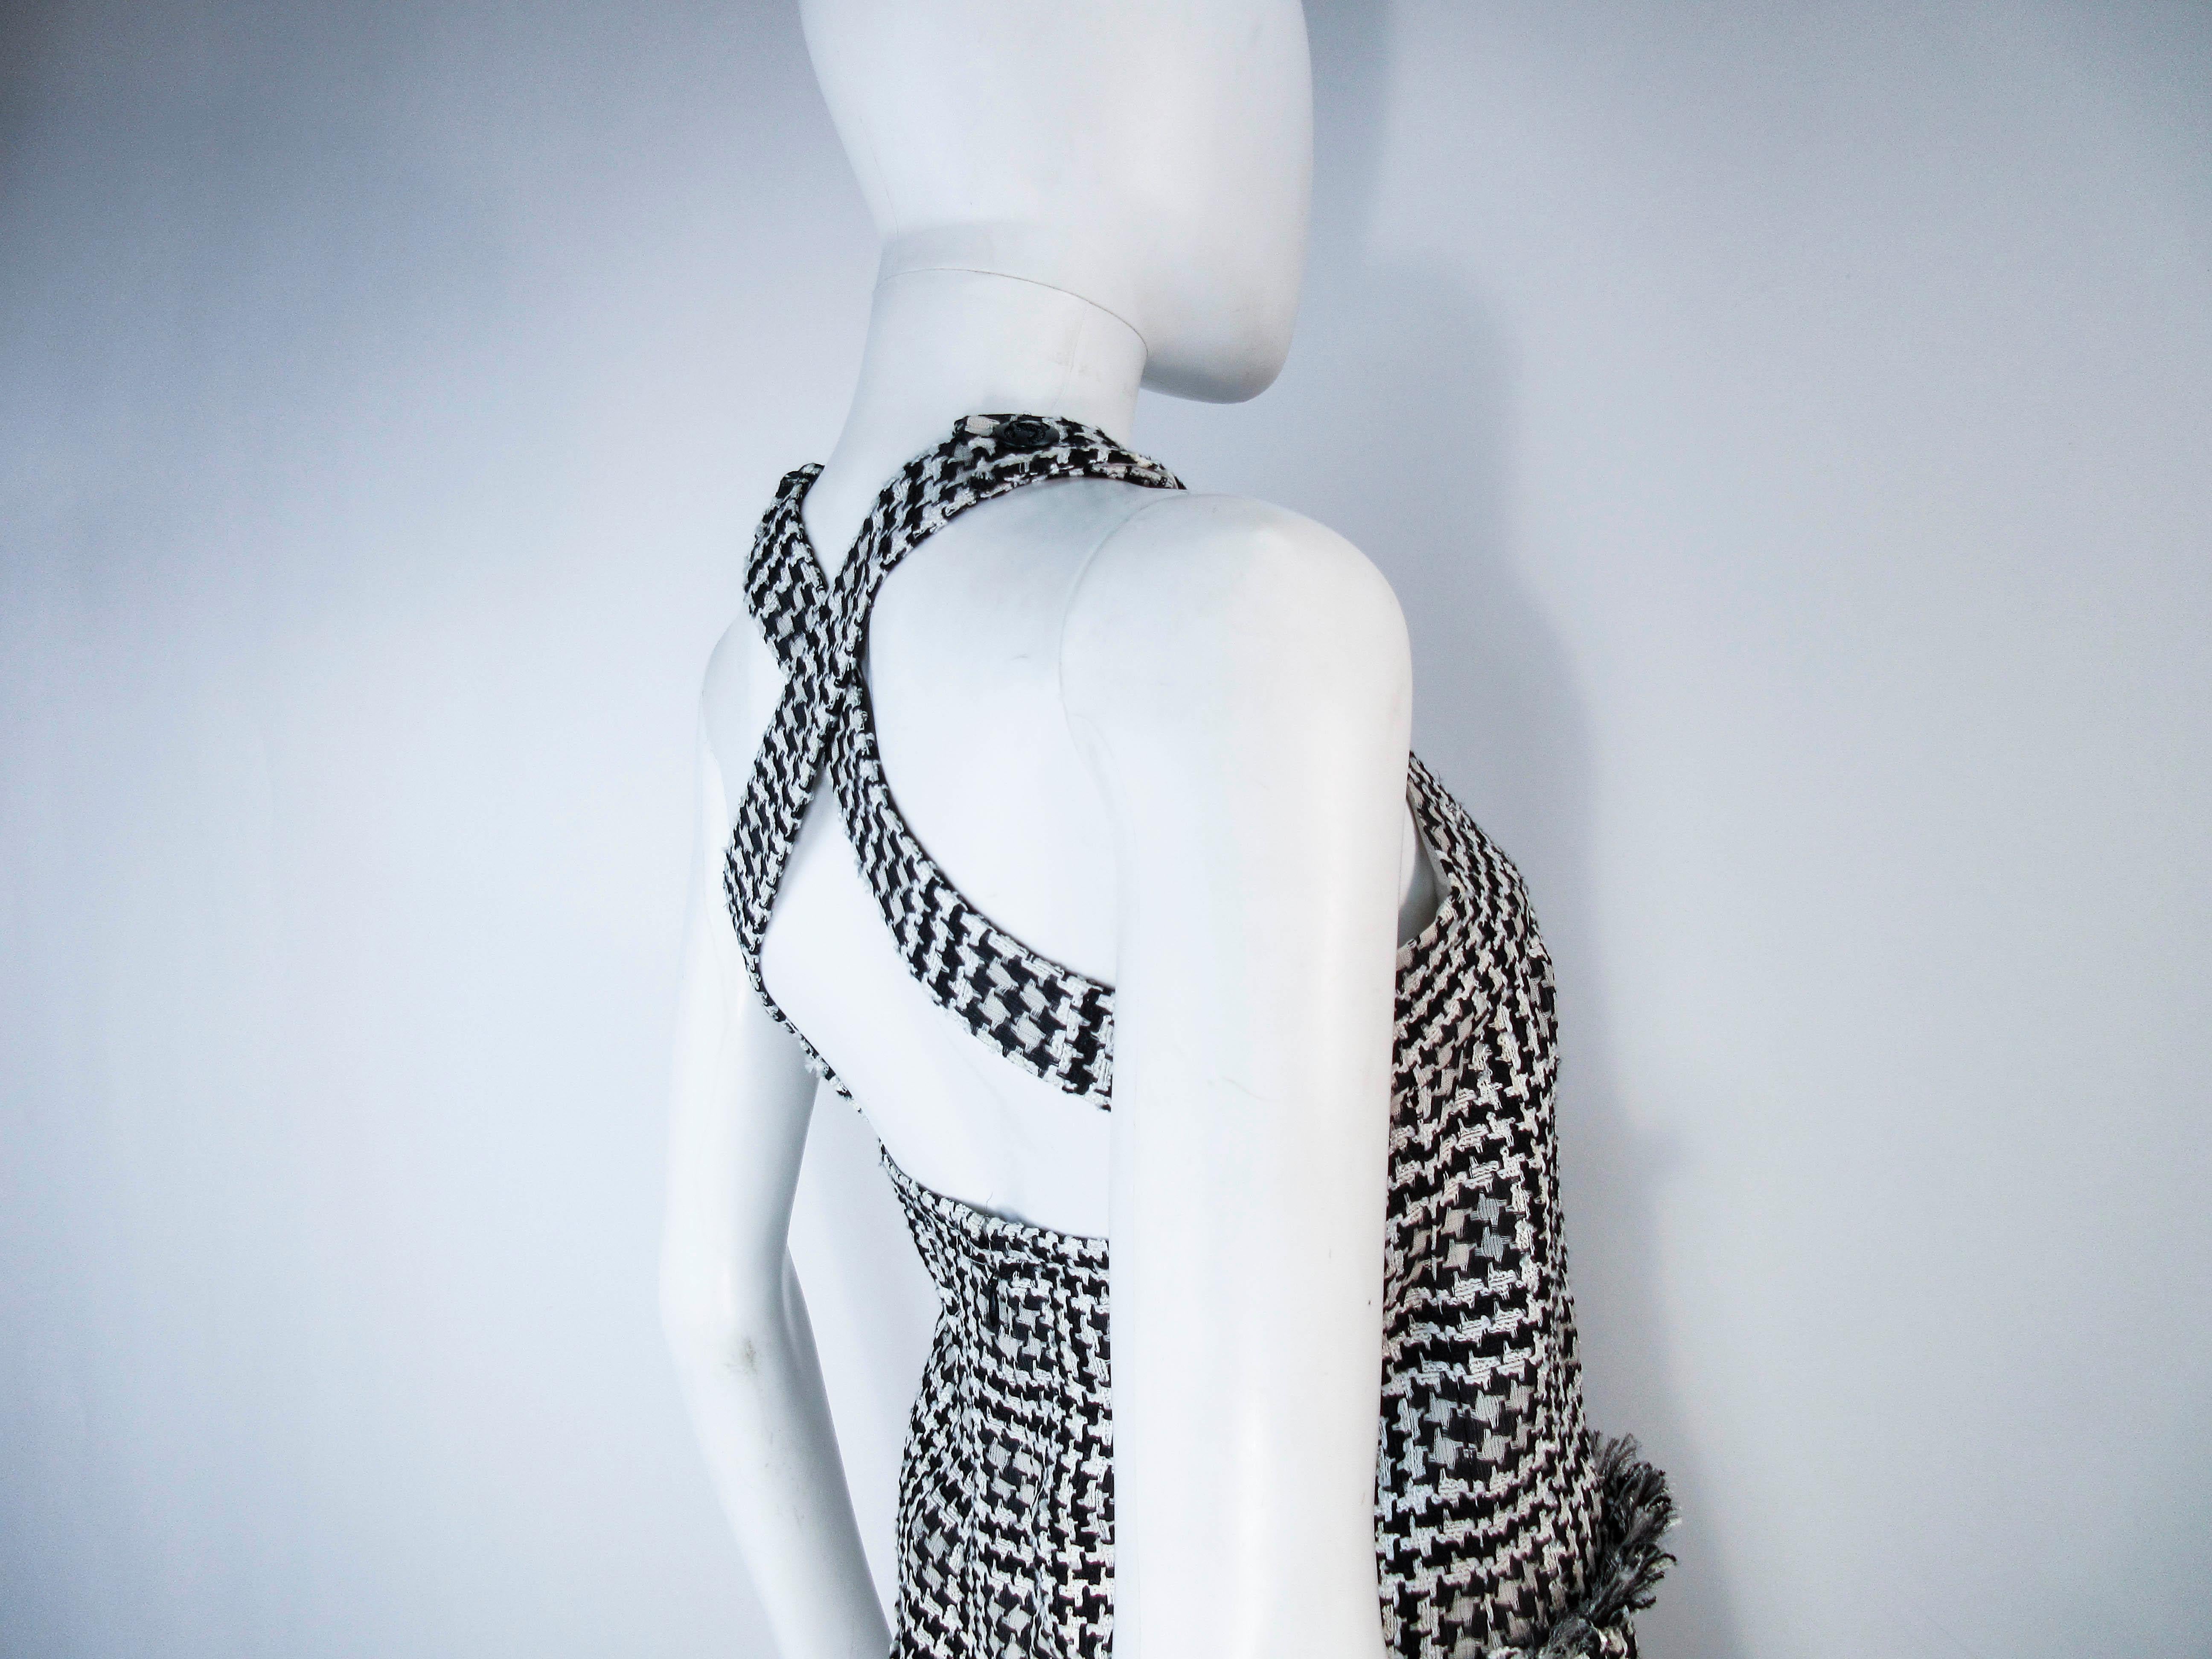 CHANEL Black & White Tweed Criss Cross Back Dress Size 36 4